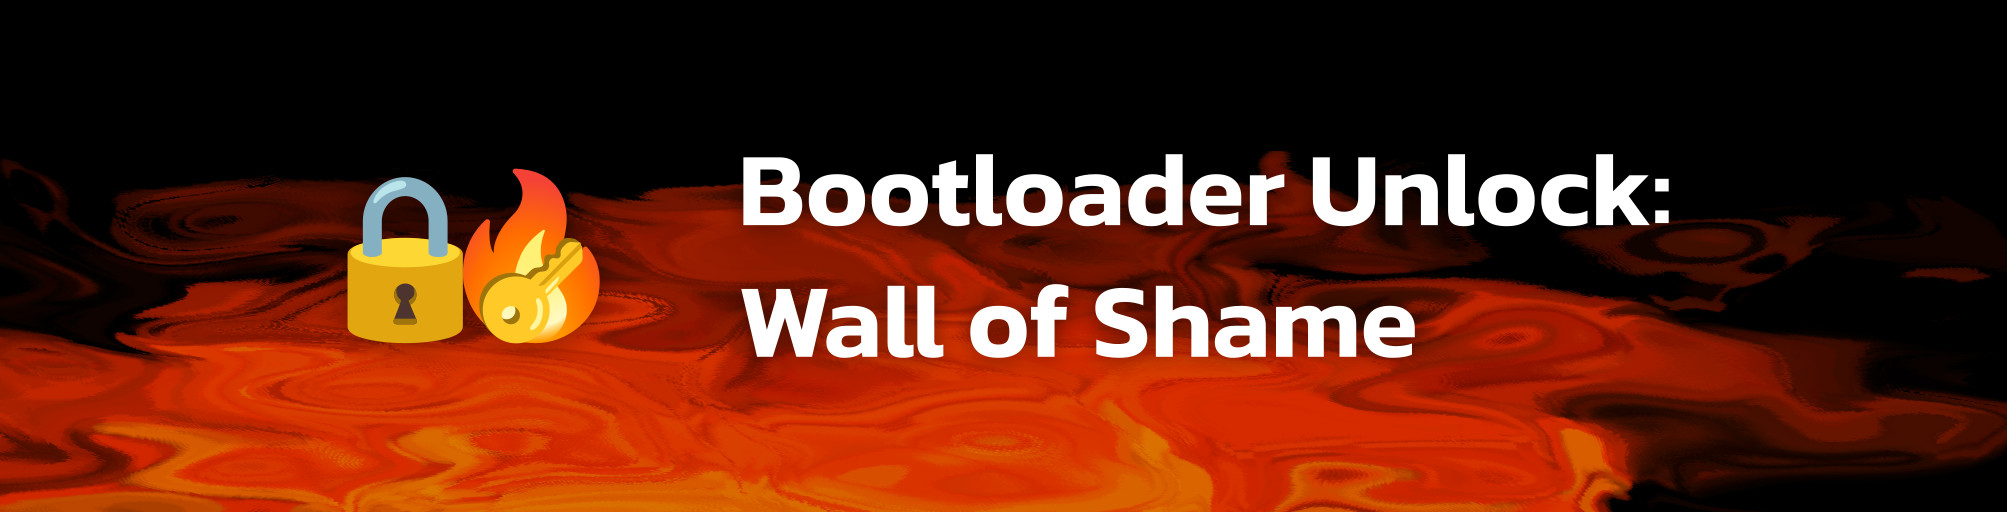 bootloader unlock wall of shame